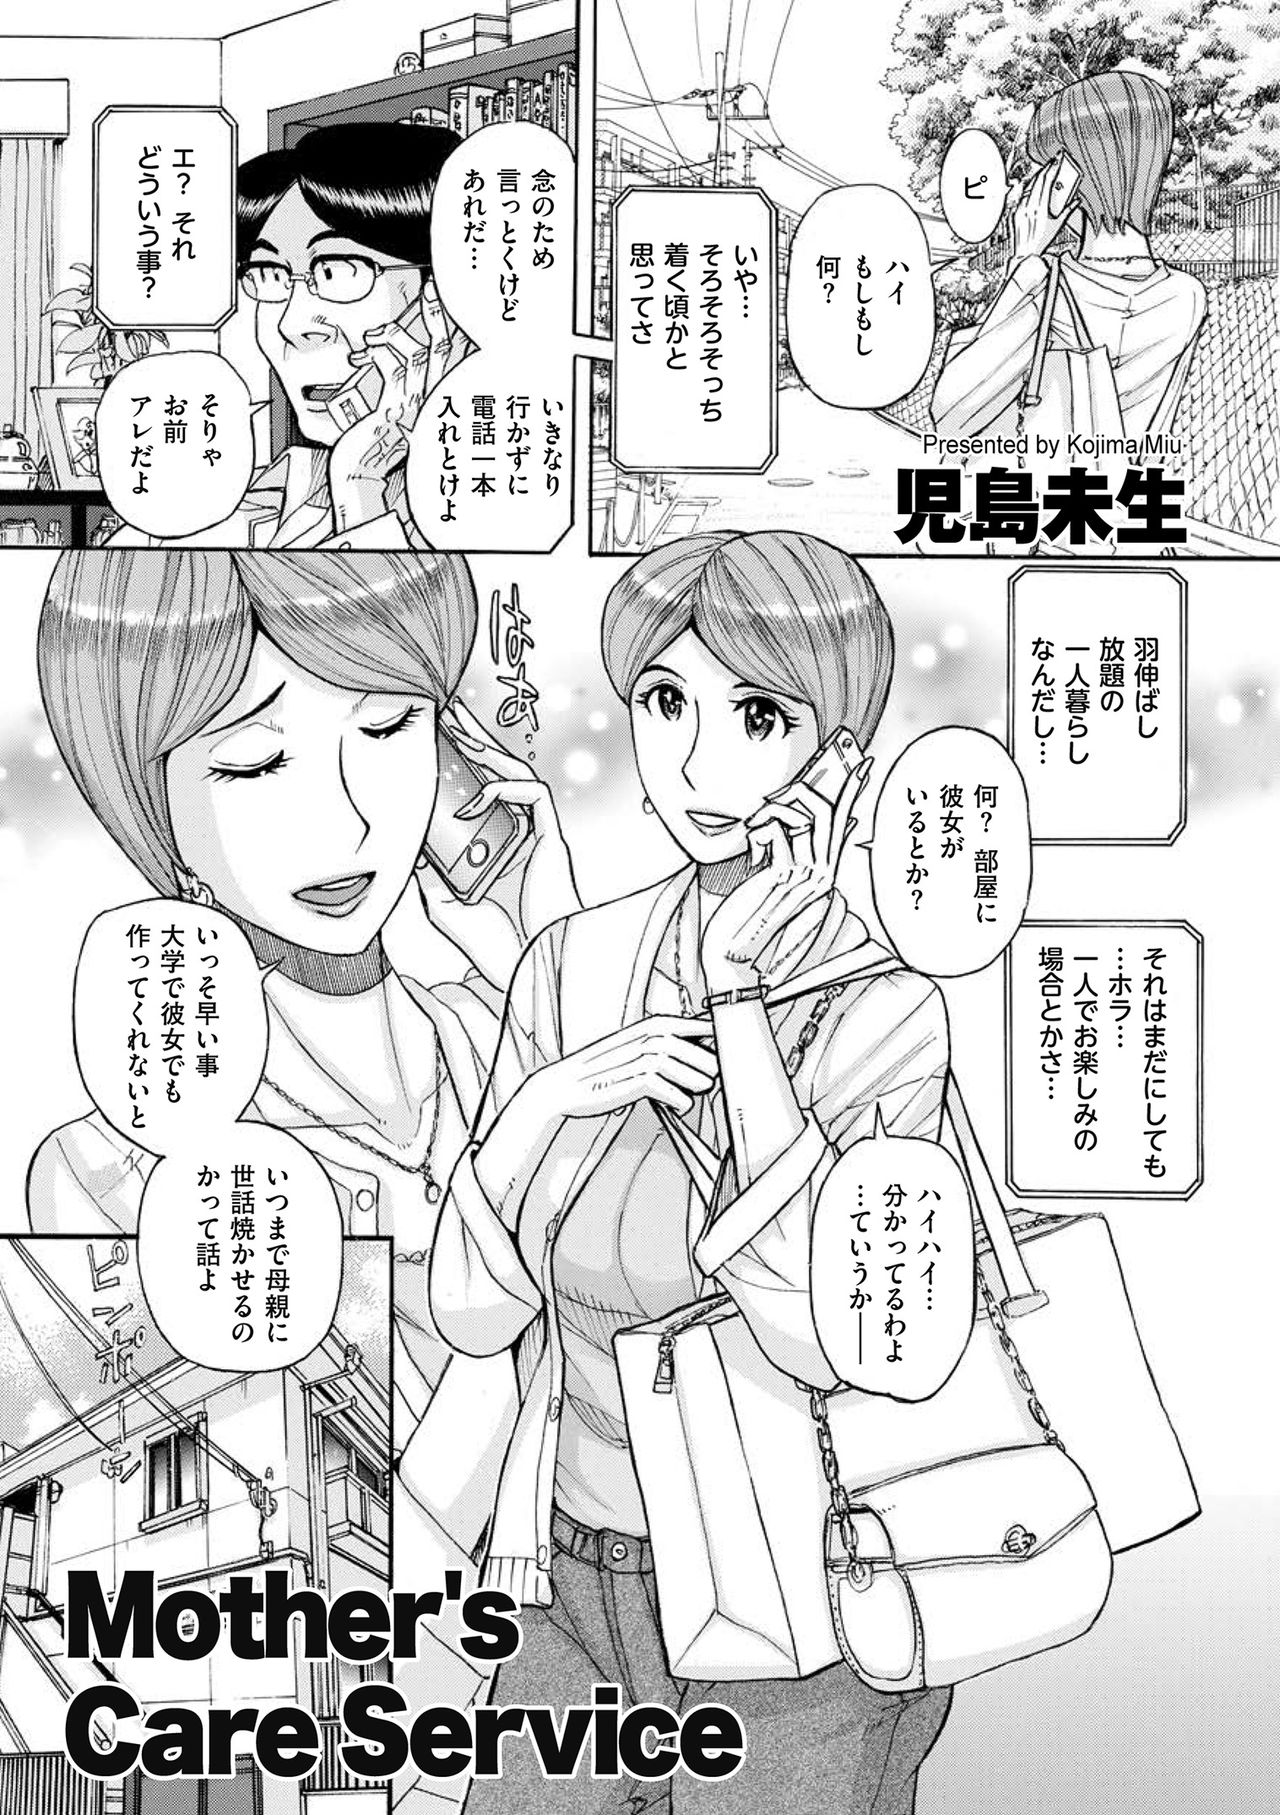 Read Kojima Miu Mother S Care Service Comic KURiBERON DUMA 2018 07